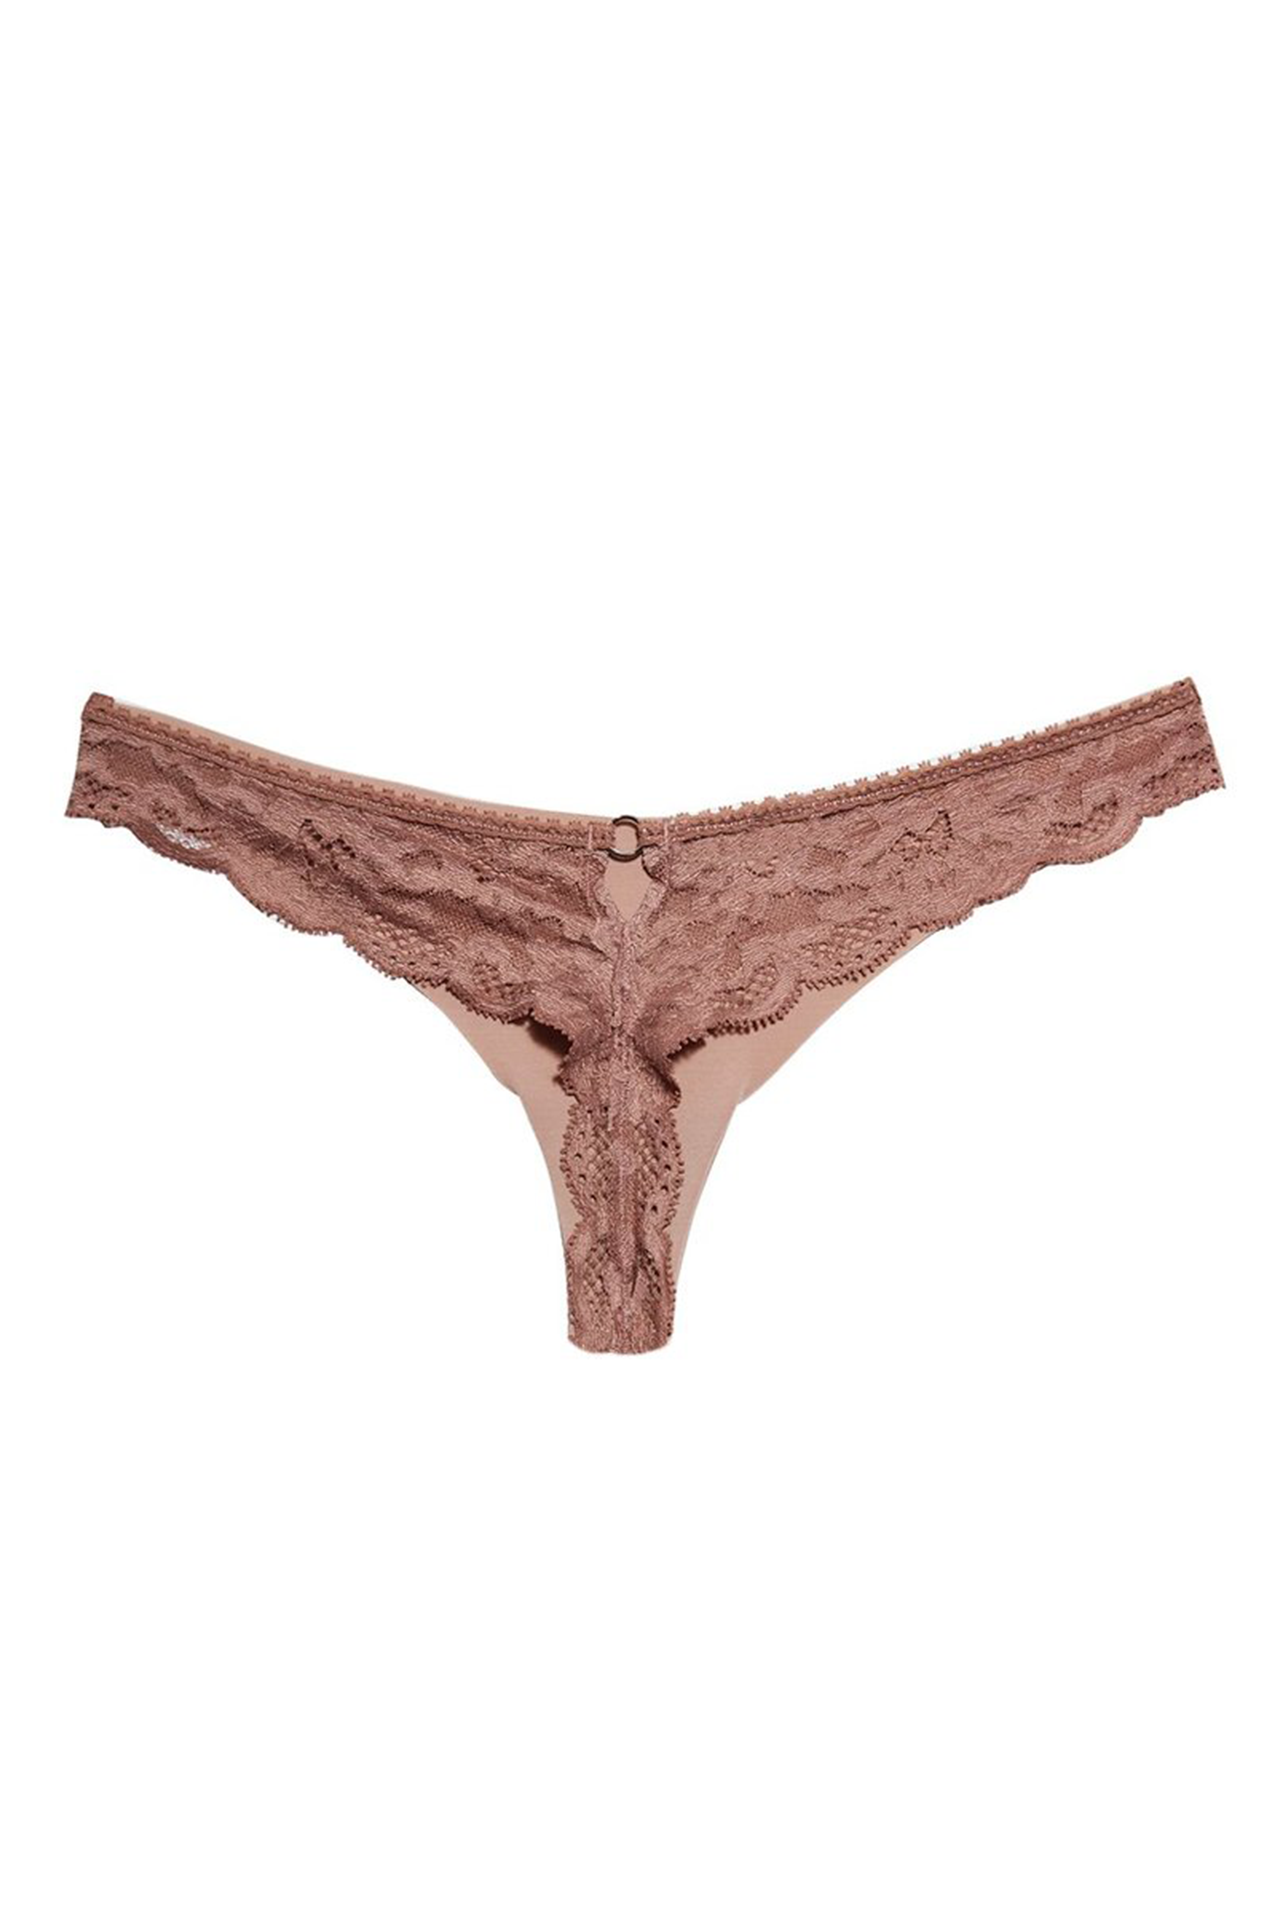 Secret Treasures Women's Seamless Thongs Panties, 3-Pack 